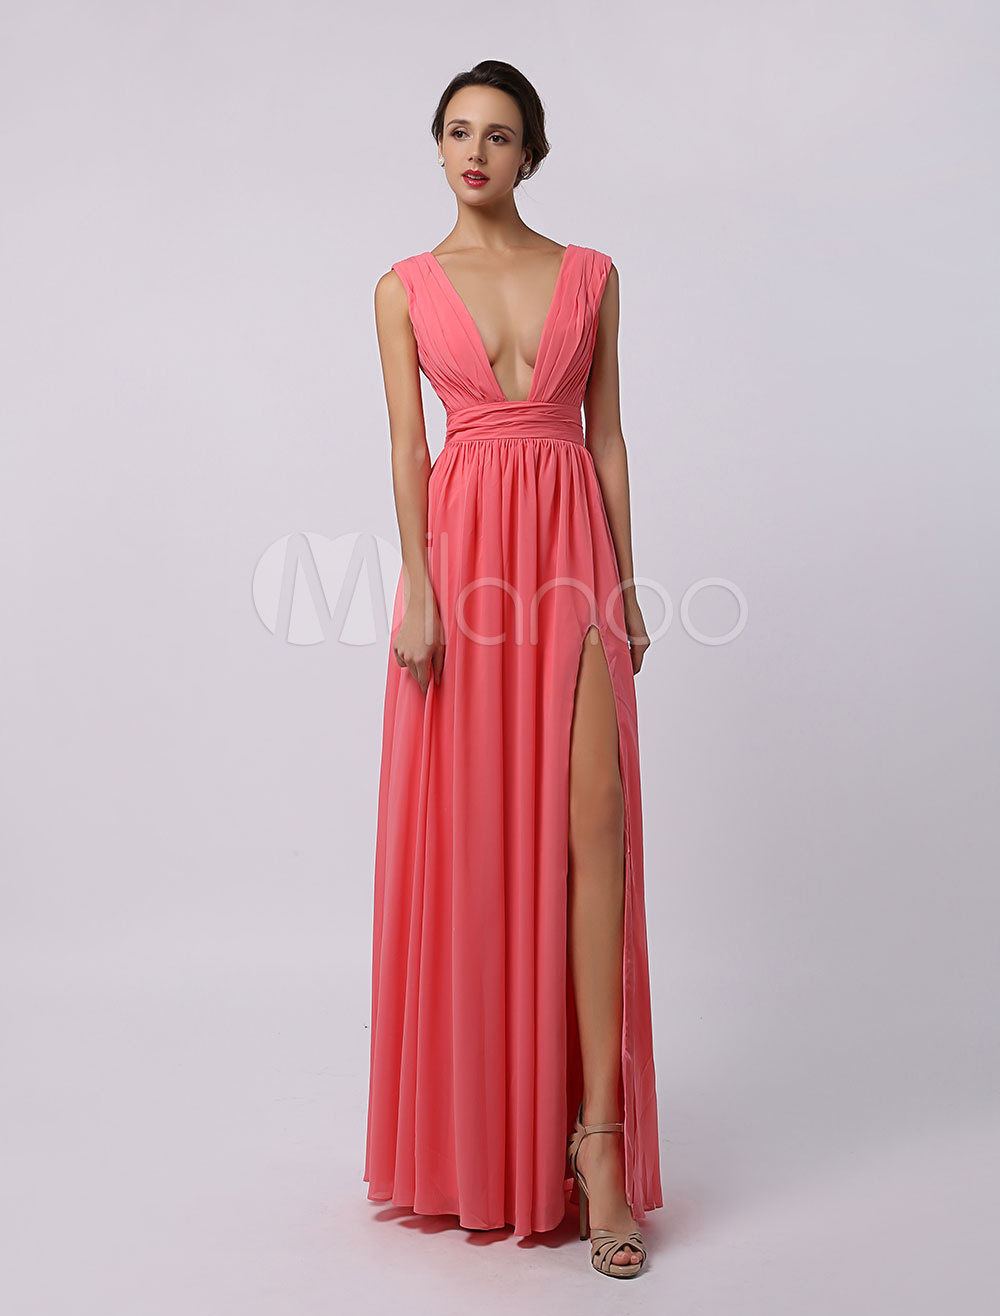 Carol Red Double V-Look High Split Prom Dress (Wedding Prom Dresses) photo